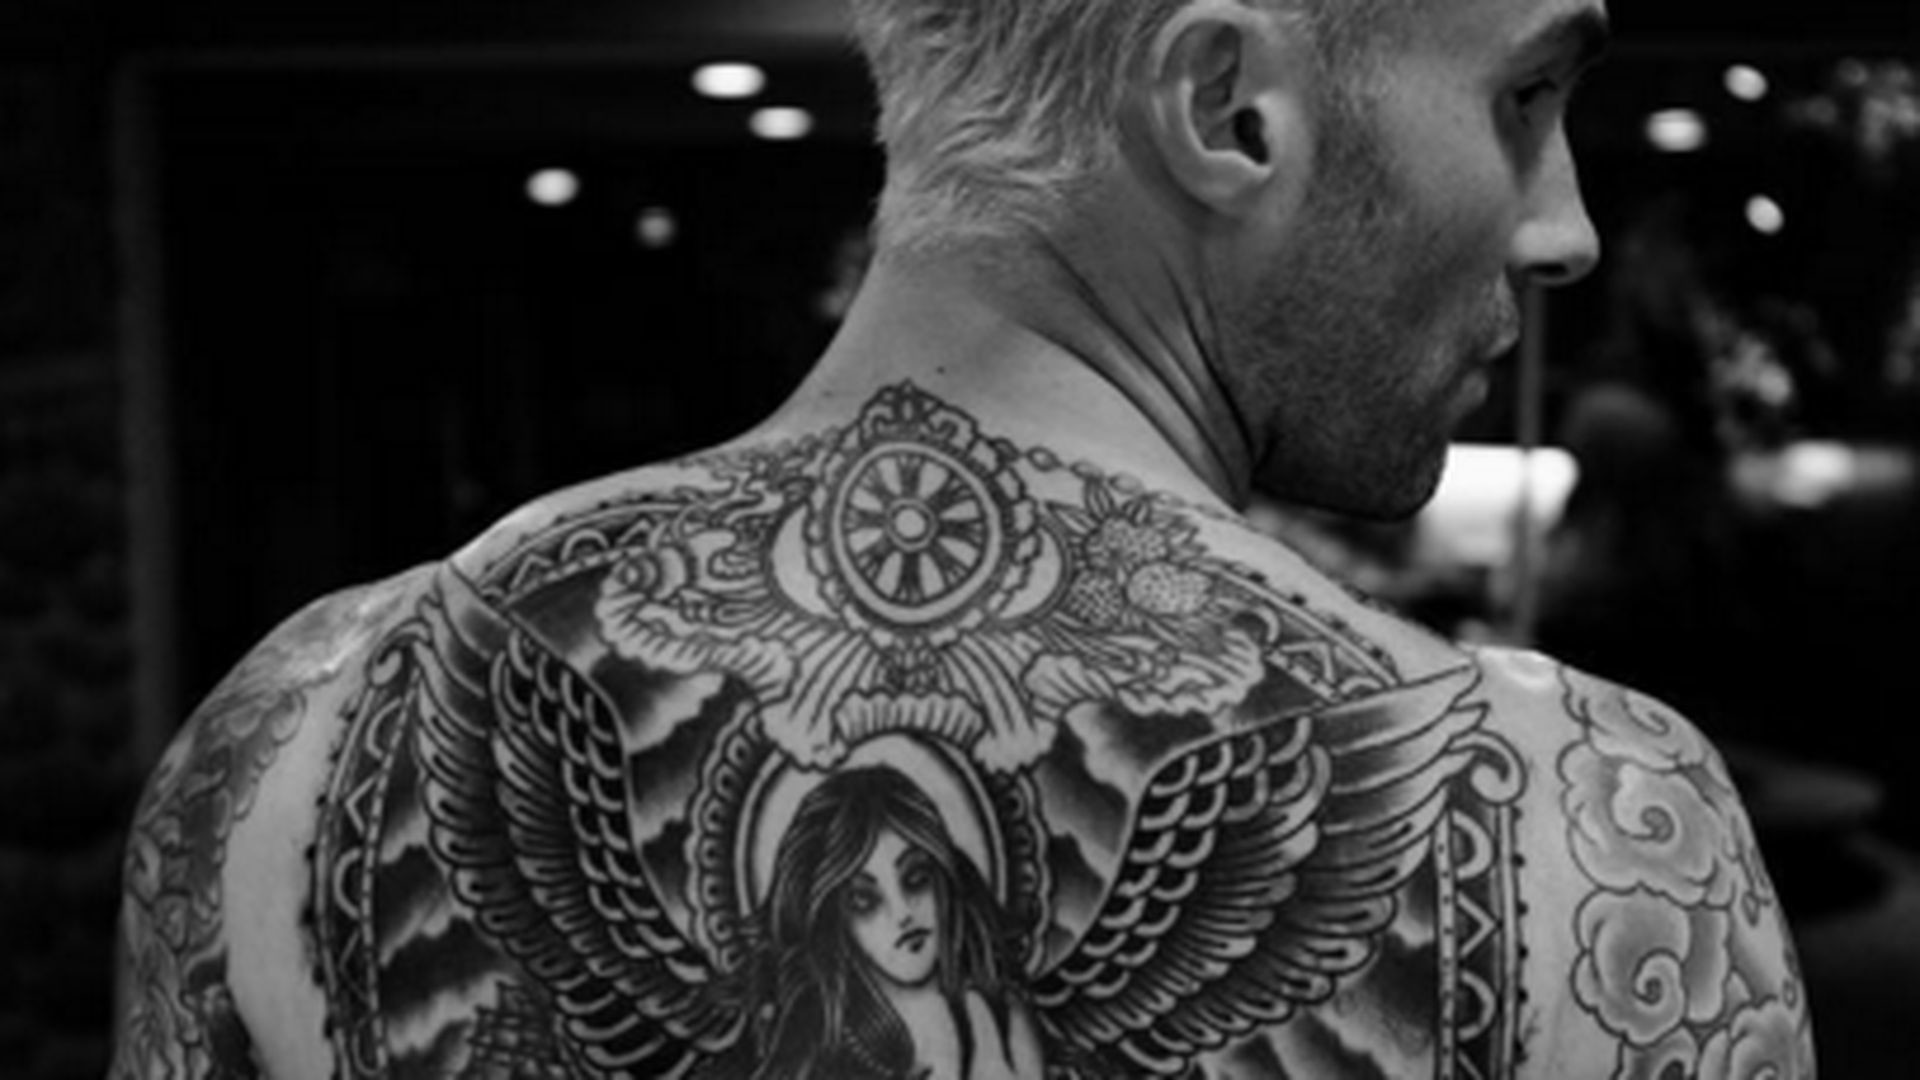 Michael Scofield's Tattoo by MiguelAngelPalma on DeviantArt